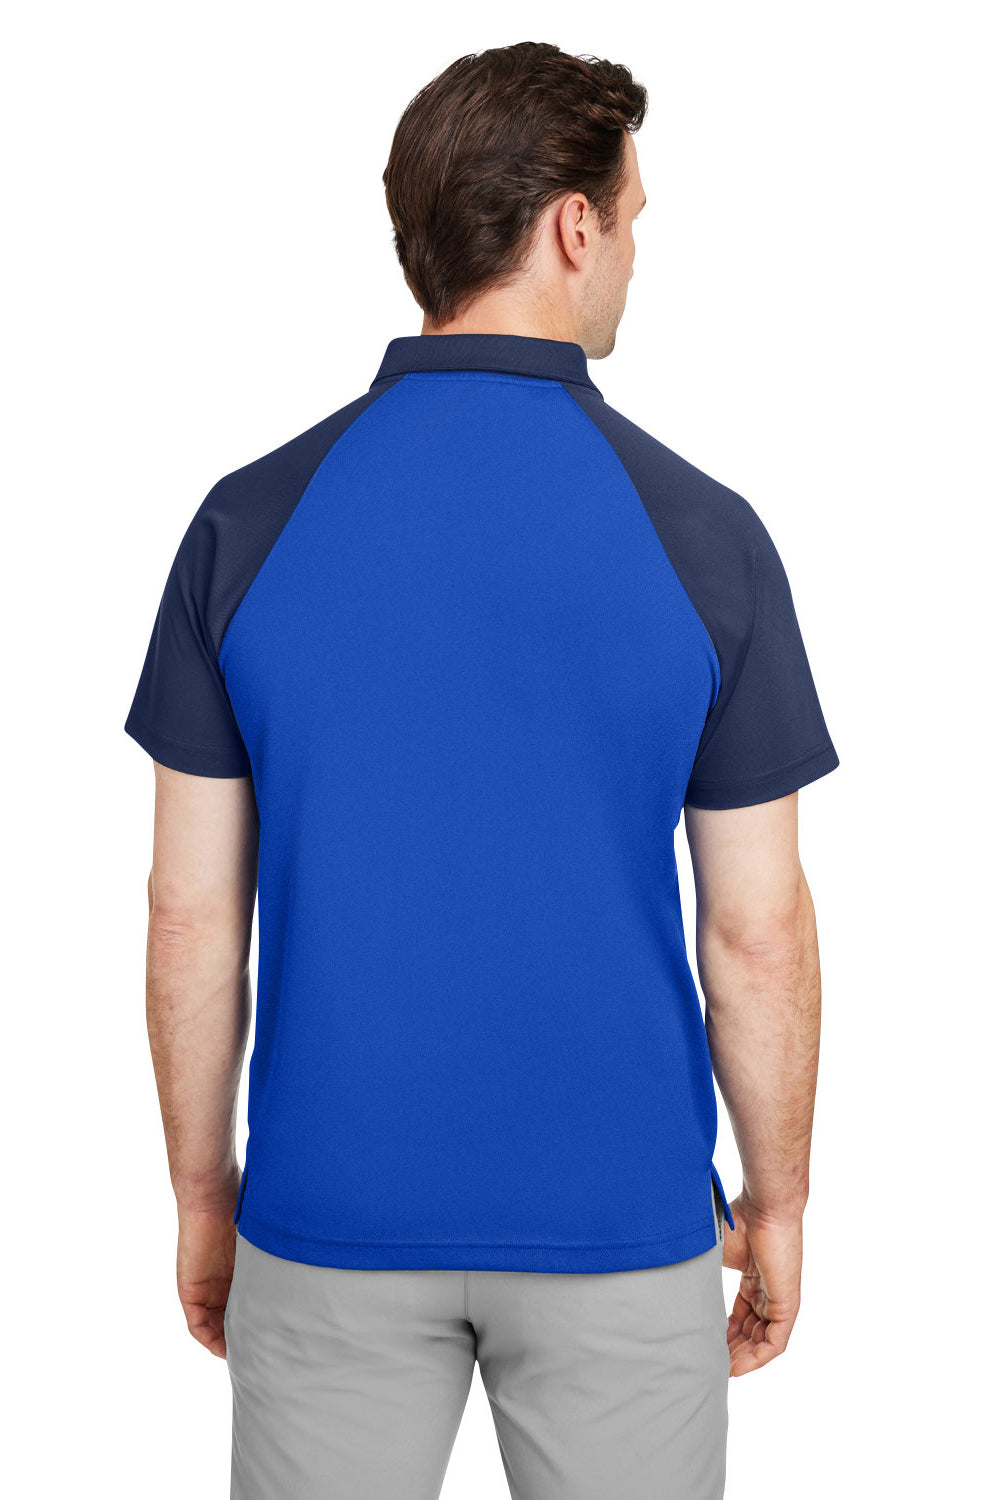 Team 365 TT21C Mens Command Colorblock Moisture Wicking Short Sleeve Polo Shirt Royal Blue/Dark Navy Blue Back